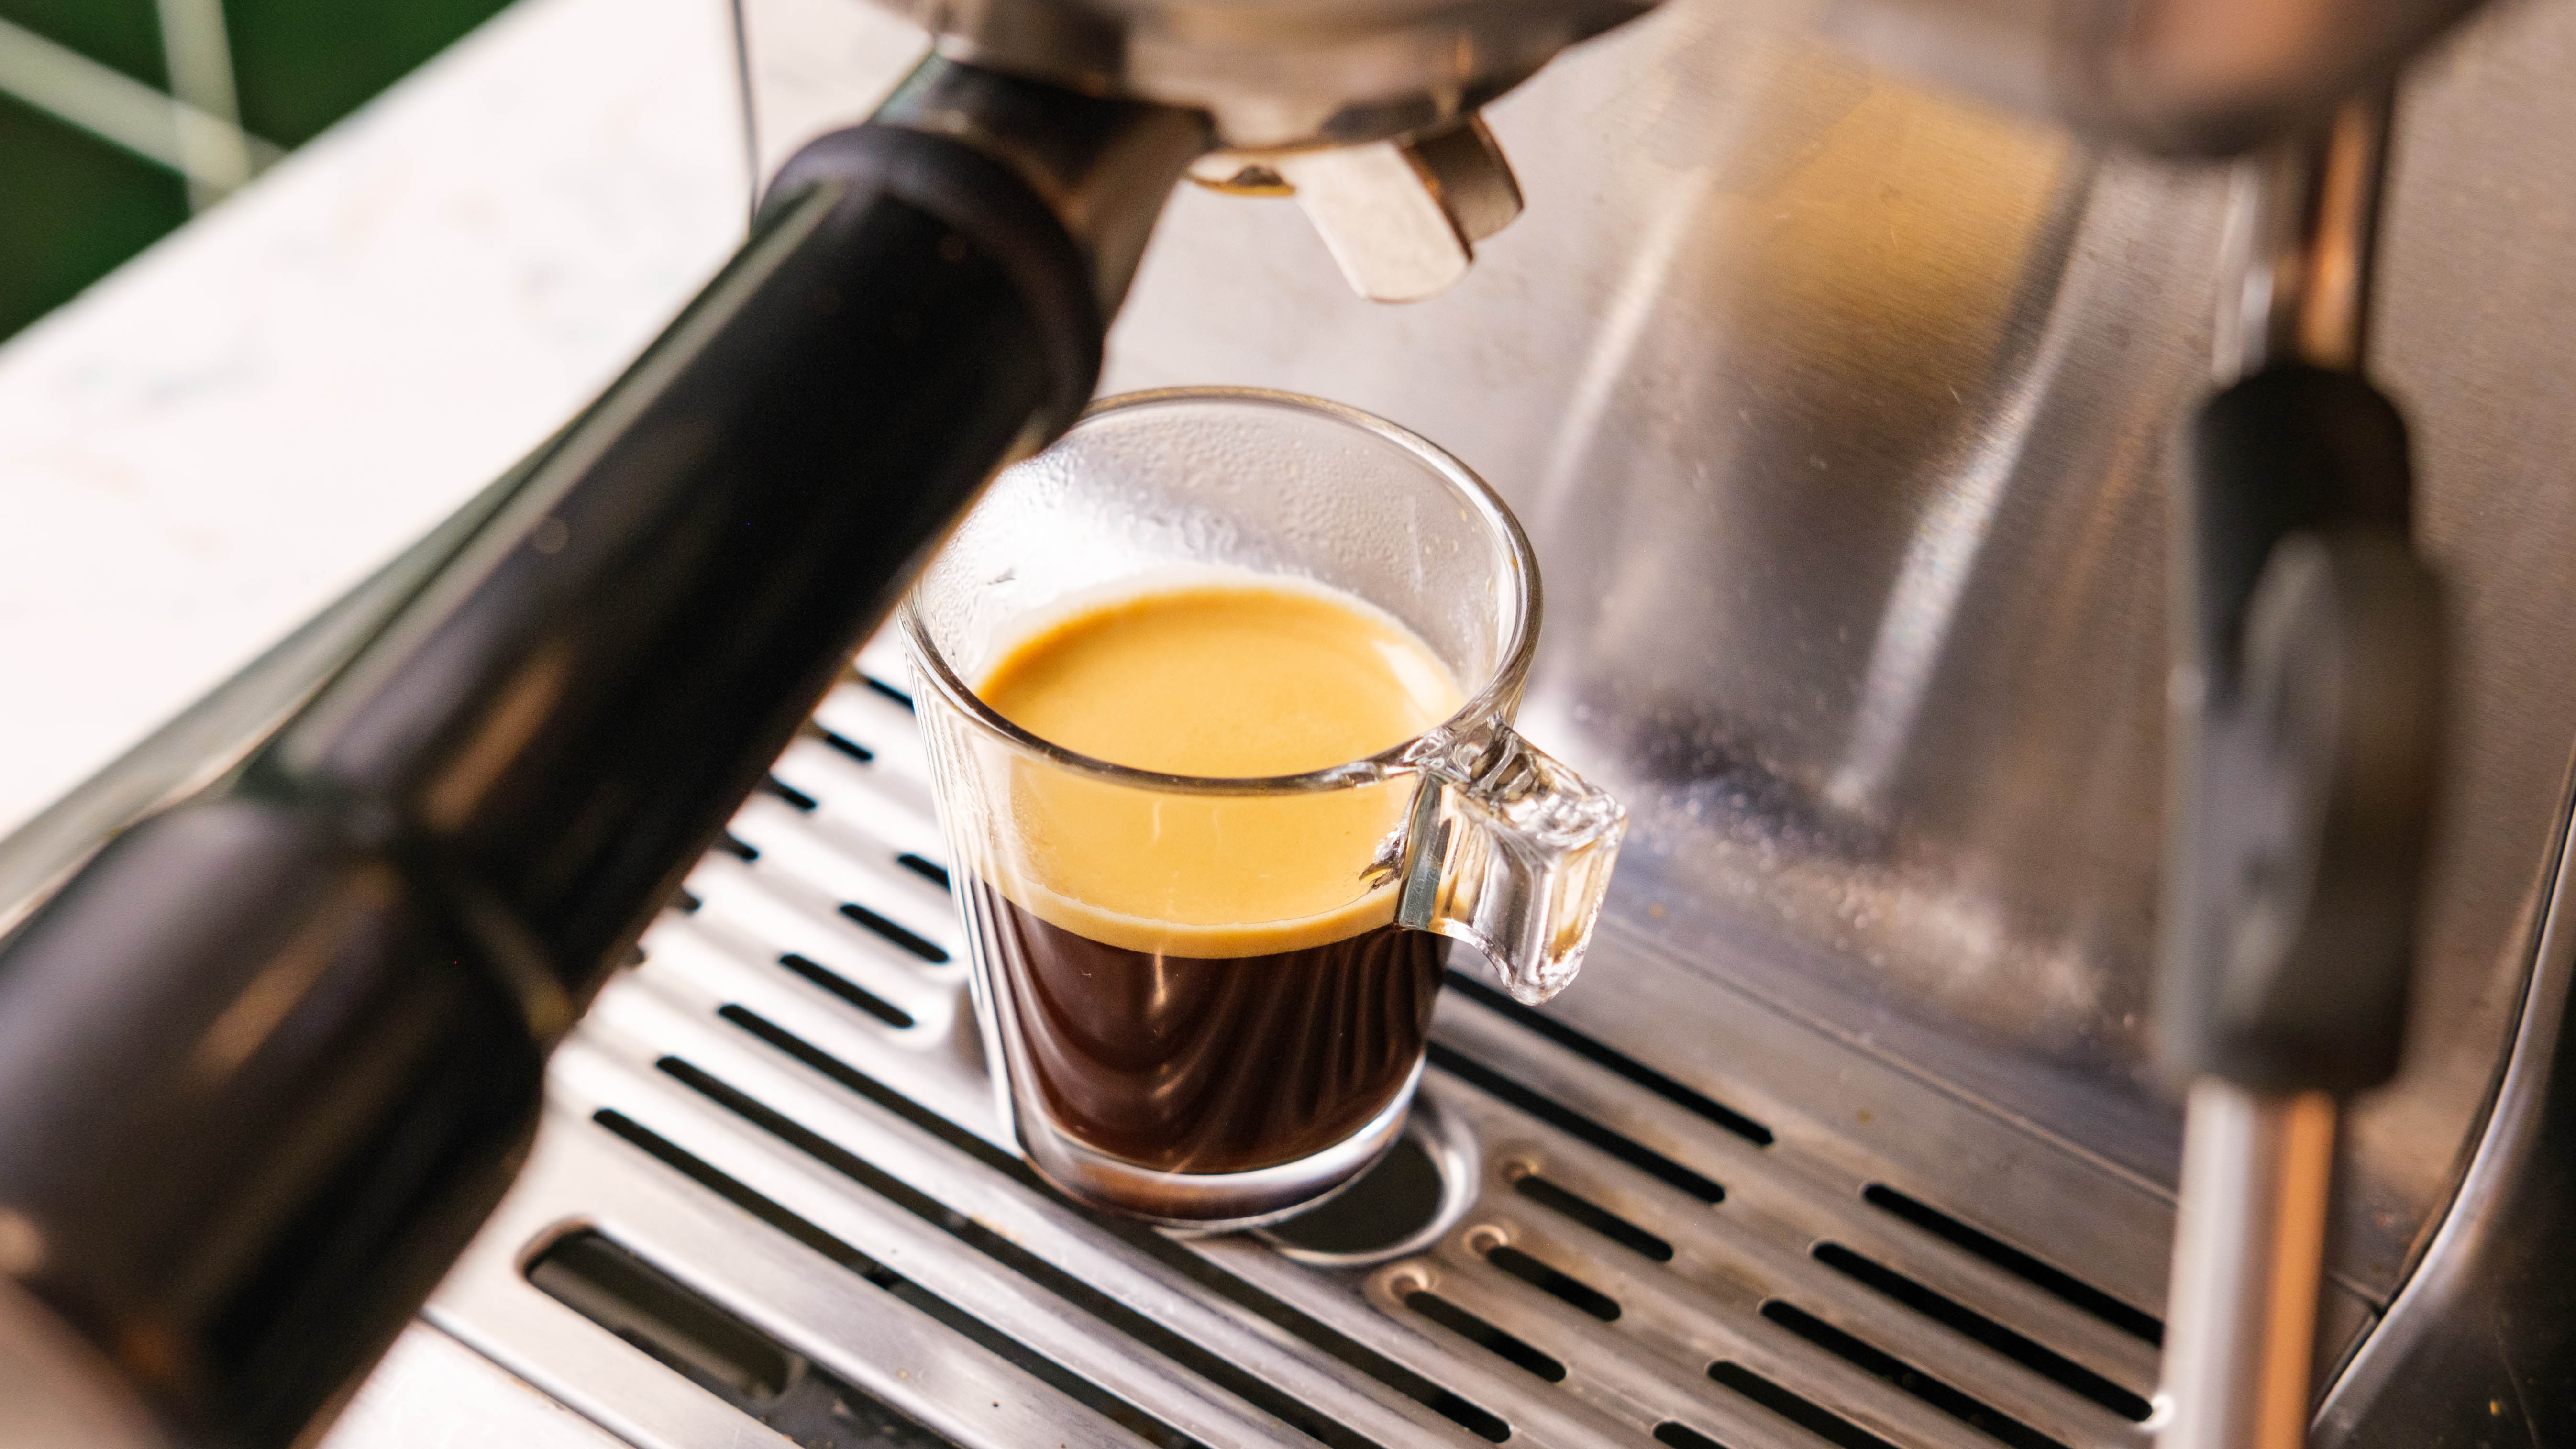 Espresso on a coffee machine